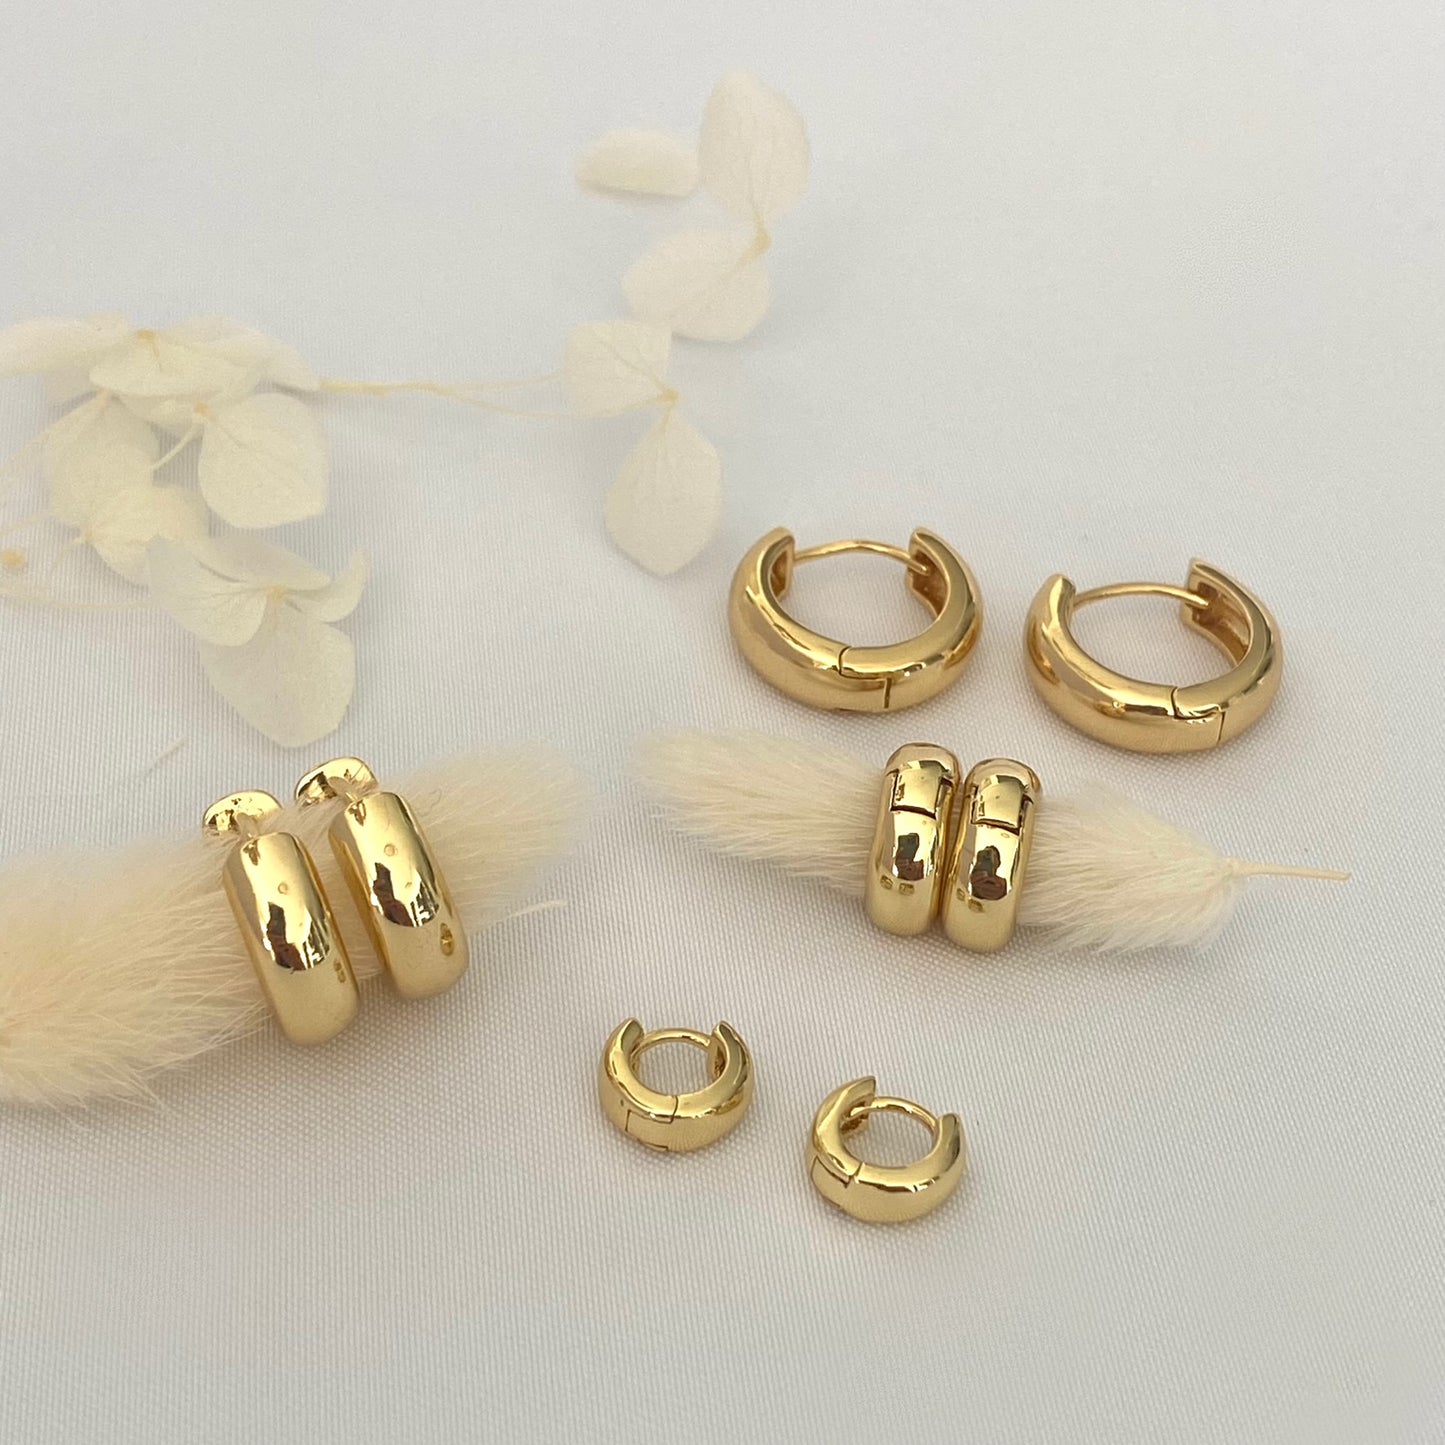 GOLD Thick 5mm Hoop Earrings, Gold Basic Simple Hoops, 10mm 12mm 16mm 18mm Hoops